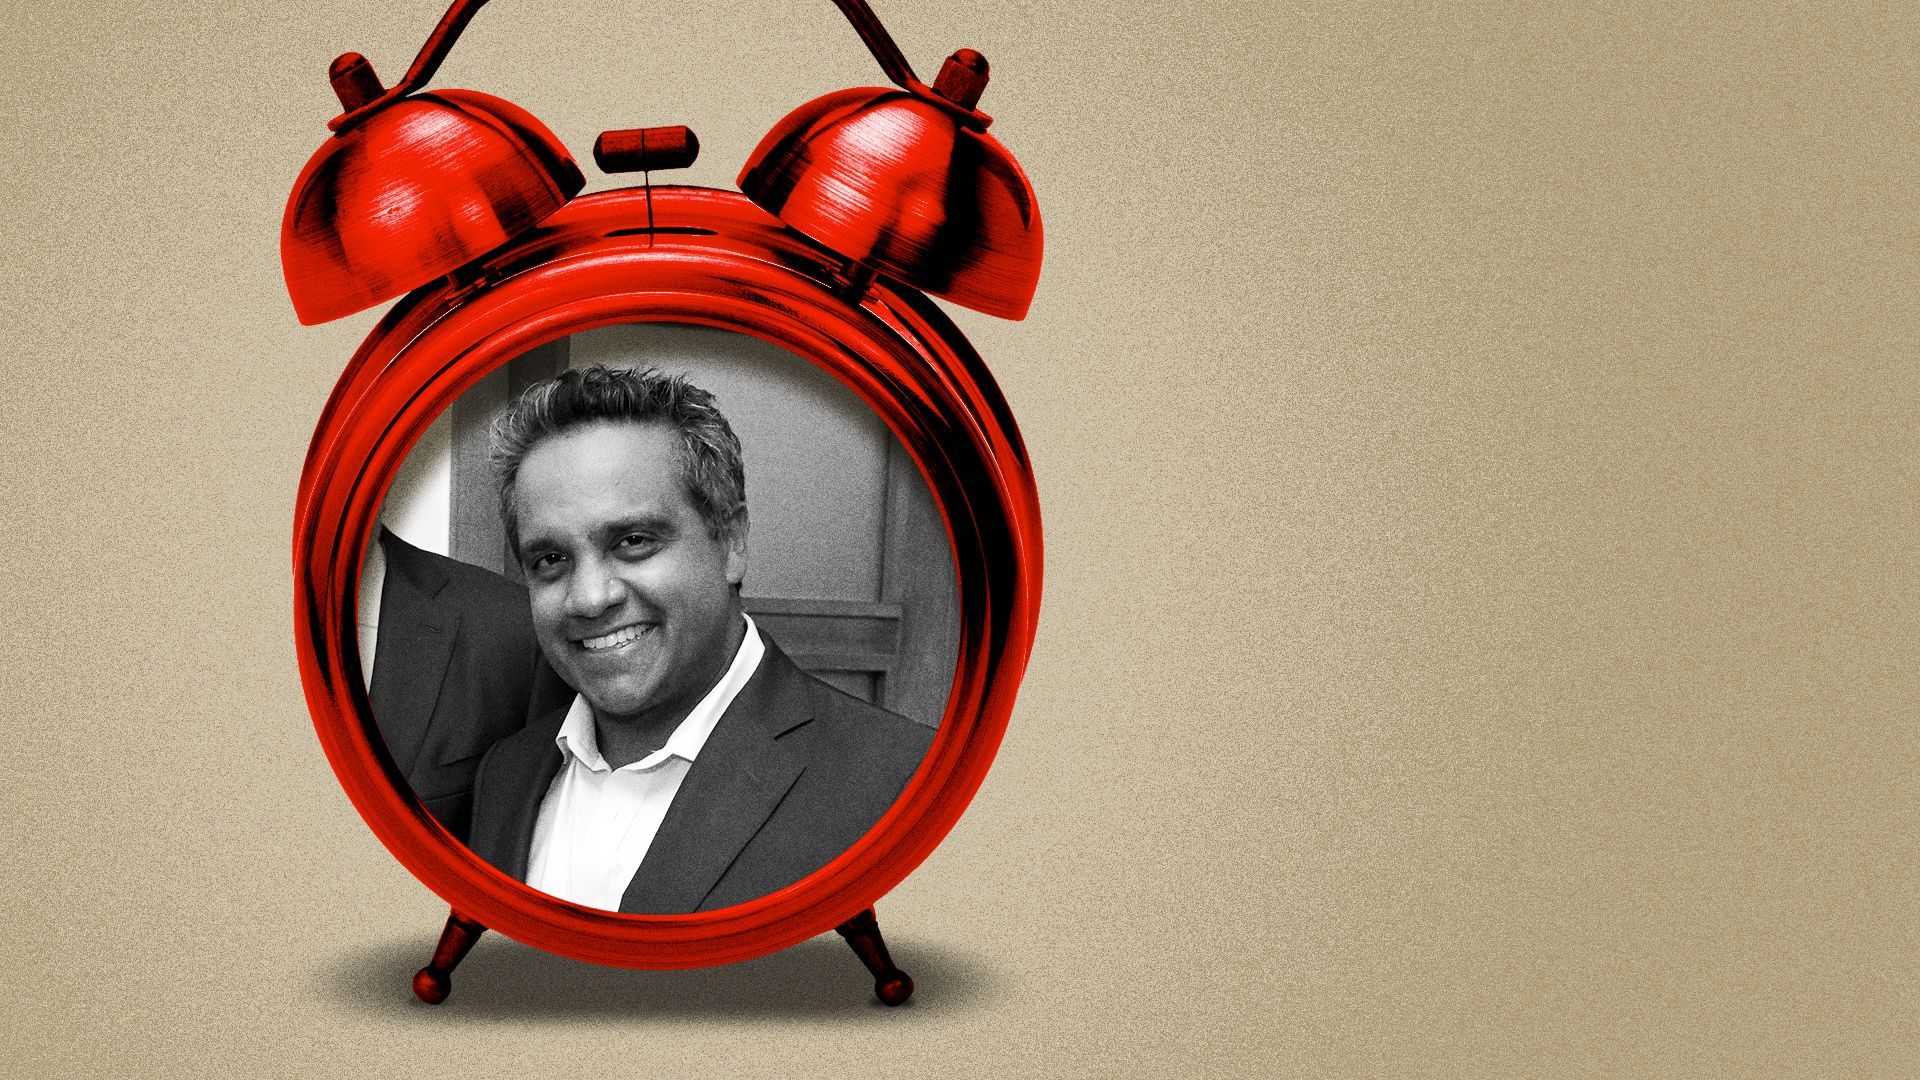 Photo illustration collage of Manu Raju inside a red alarm clock.